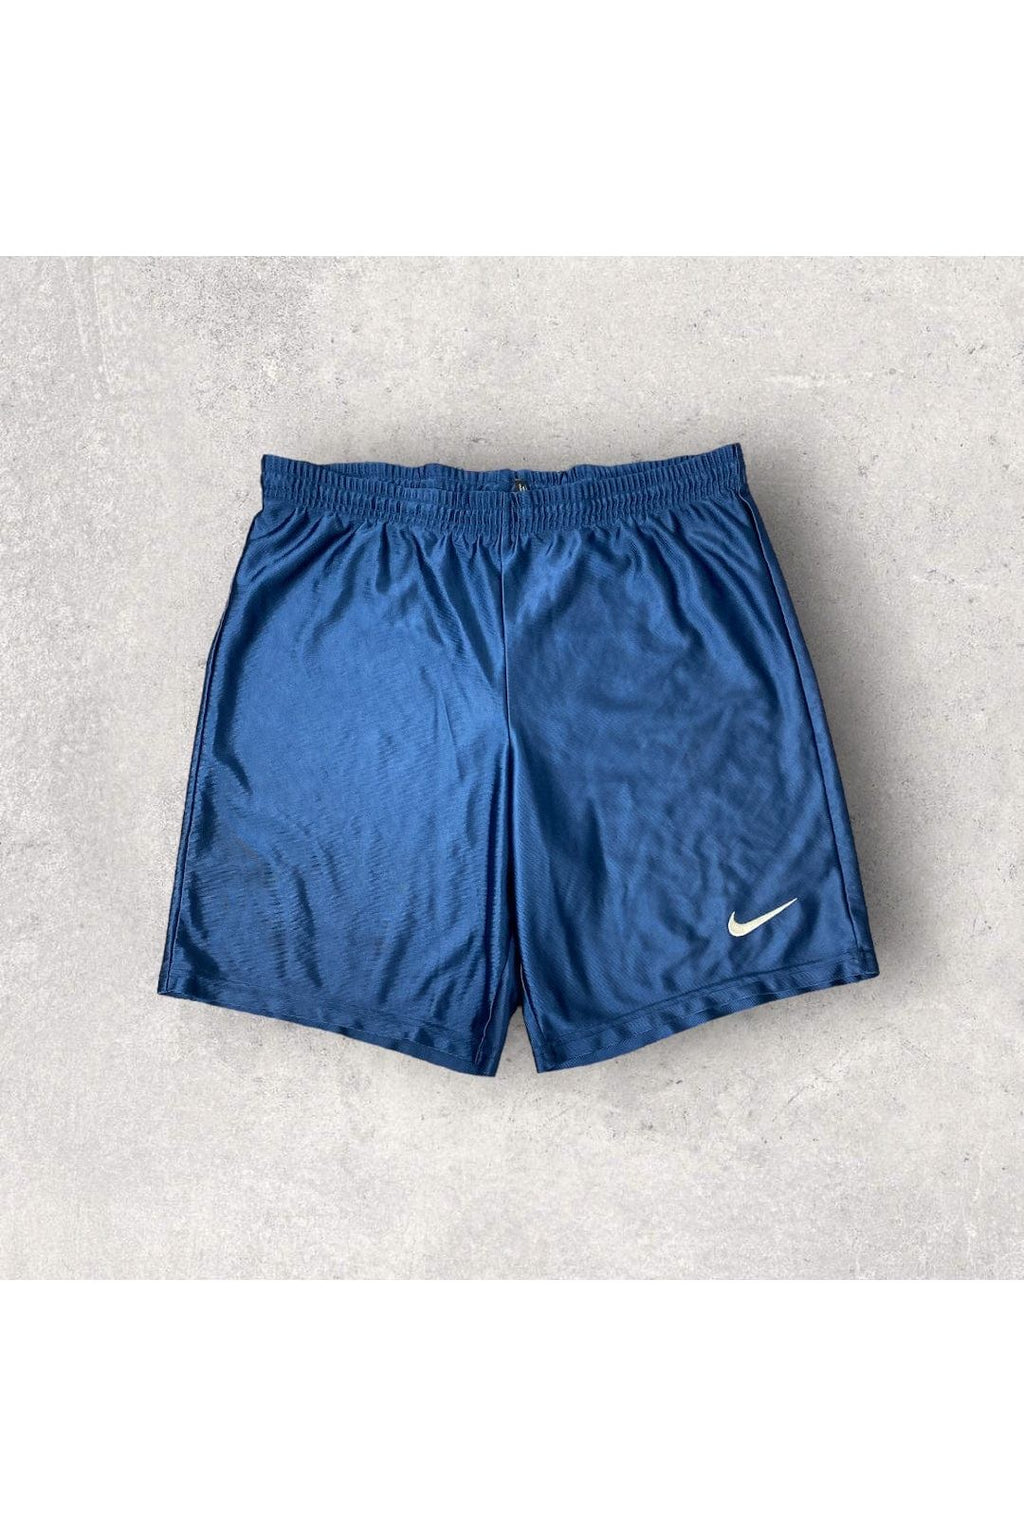 Vintage 2000s Nike Gym Shorts- YTH L (14-16)